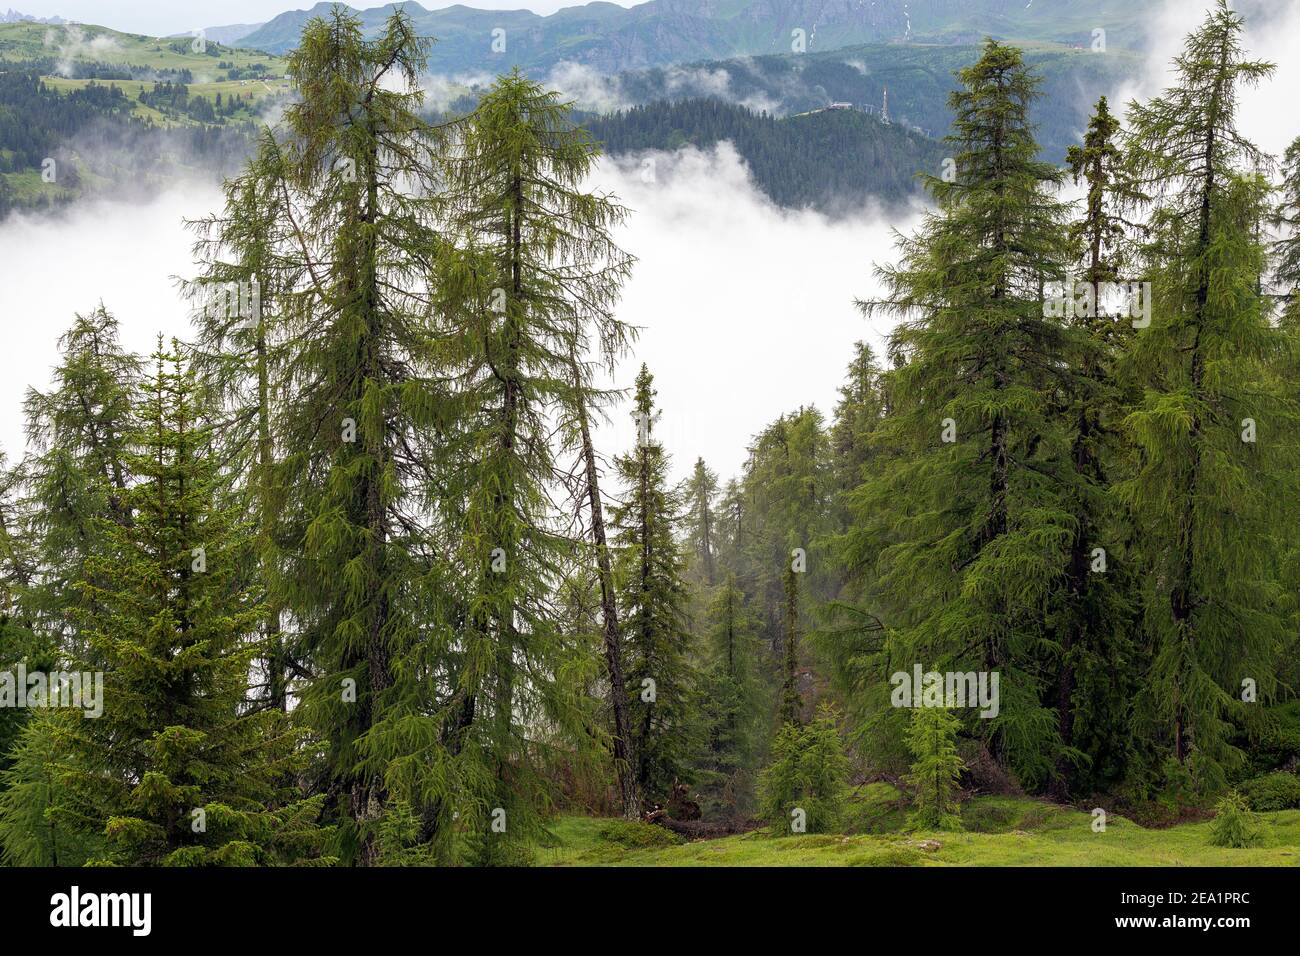 Larch forest (Larix decidua). Gardenaccia. Puez mountain group. Clouds and fog. The Dolomites. Italian Alps. Europe. Stock Photo